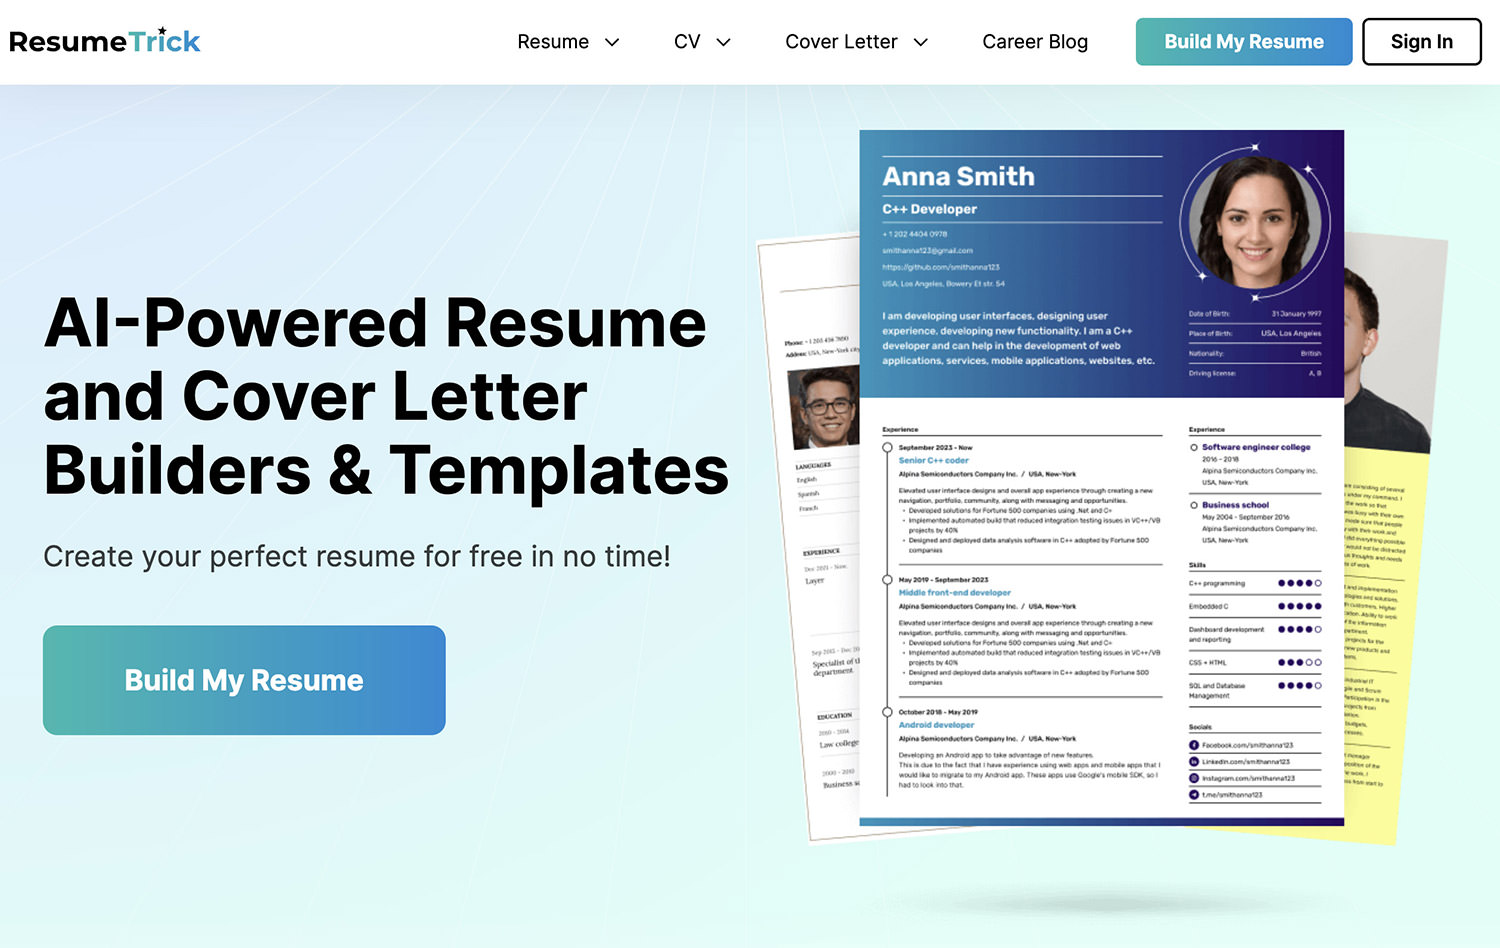 Screenshot of Resume Trick homepage